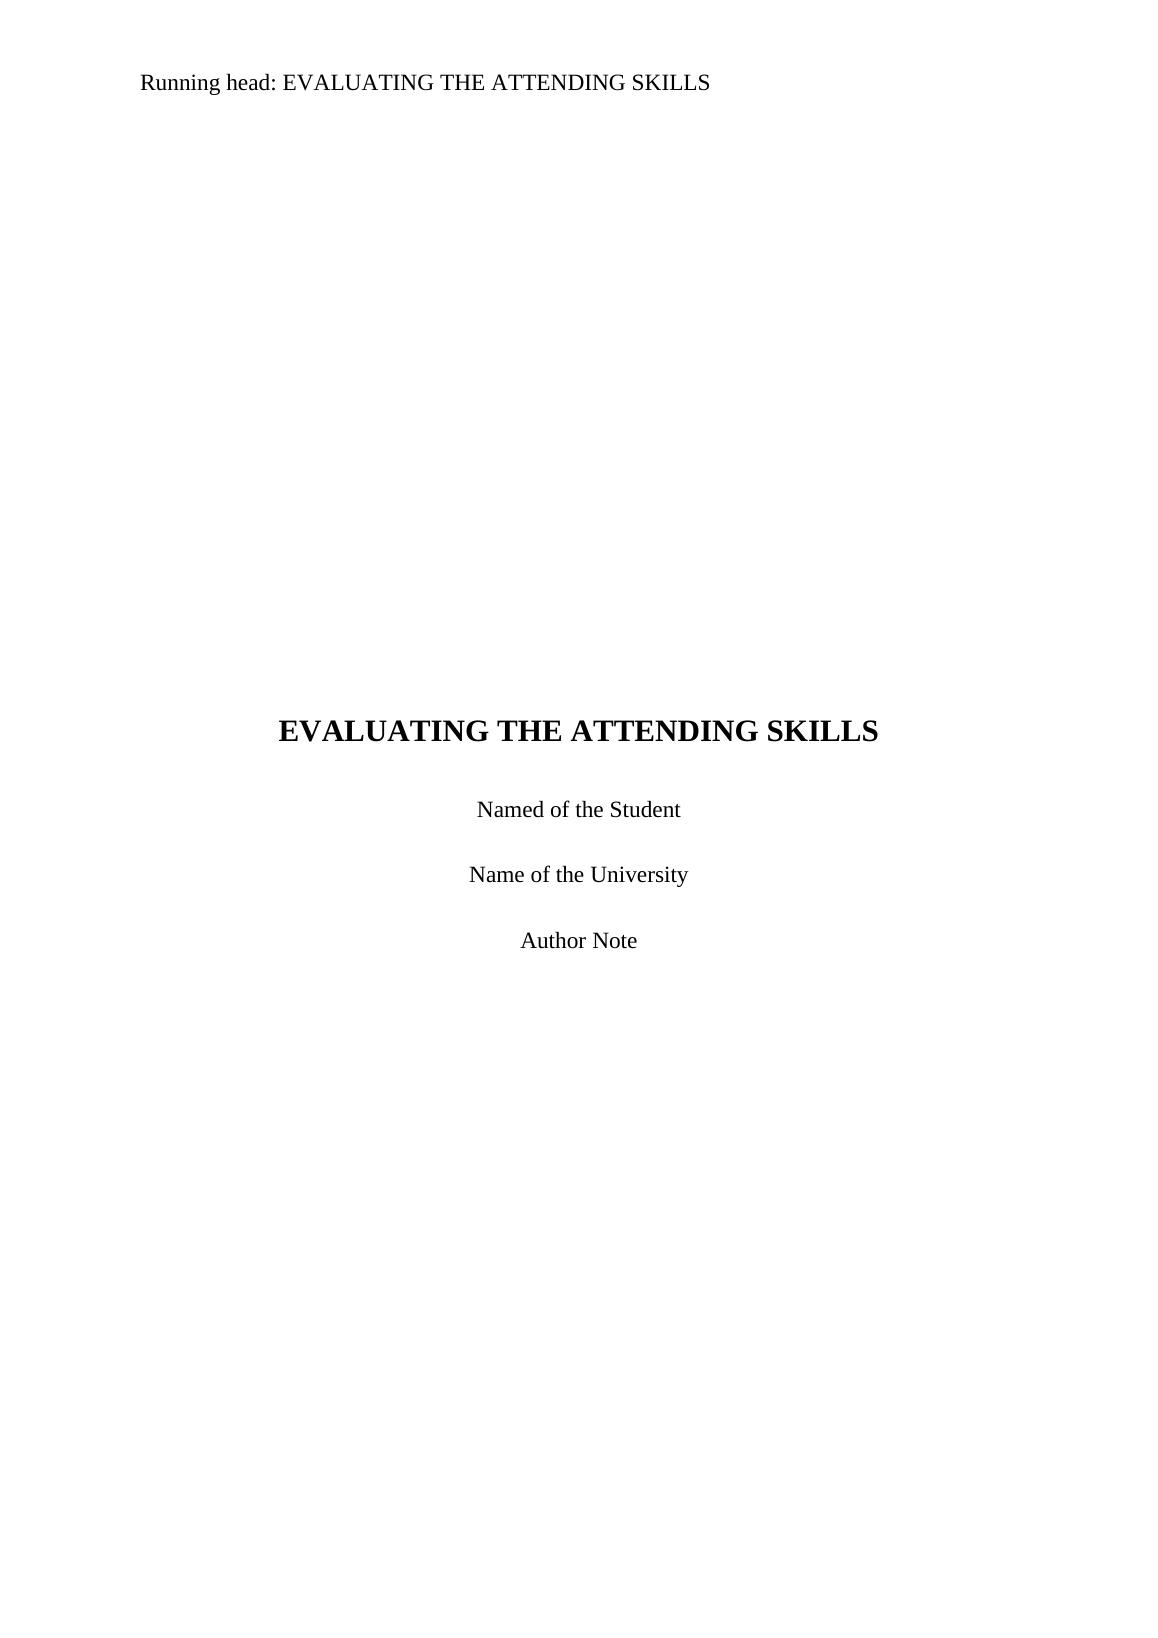 Evaluating The Attending Skills | Assessment_1